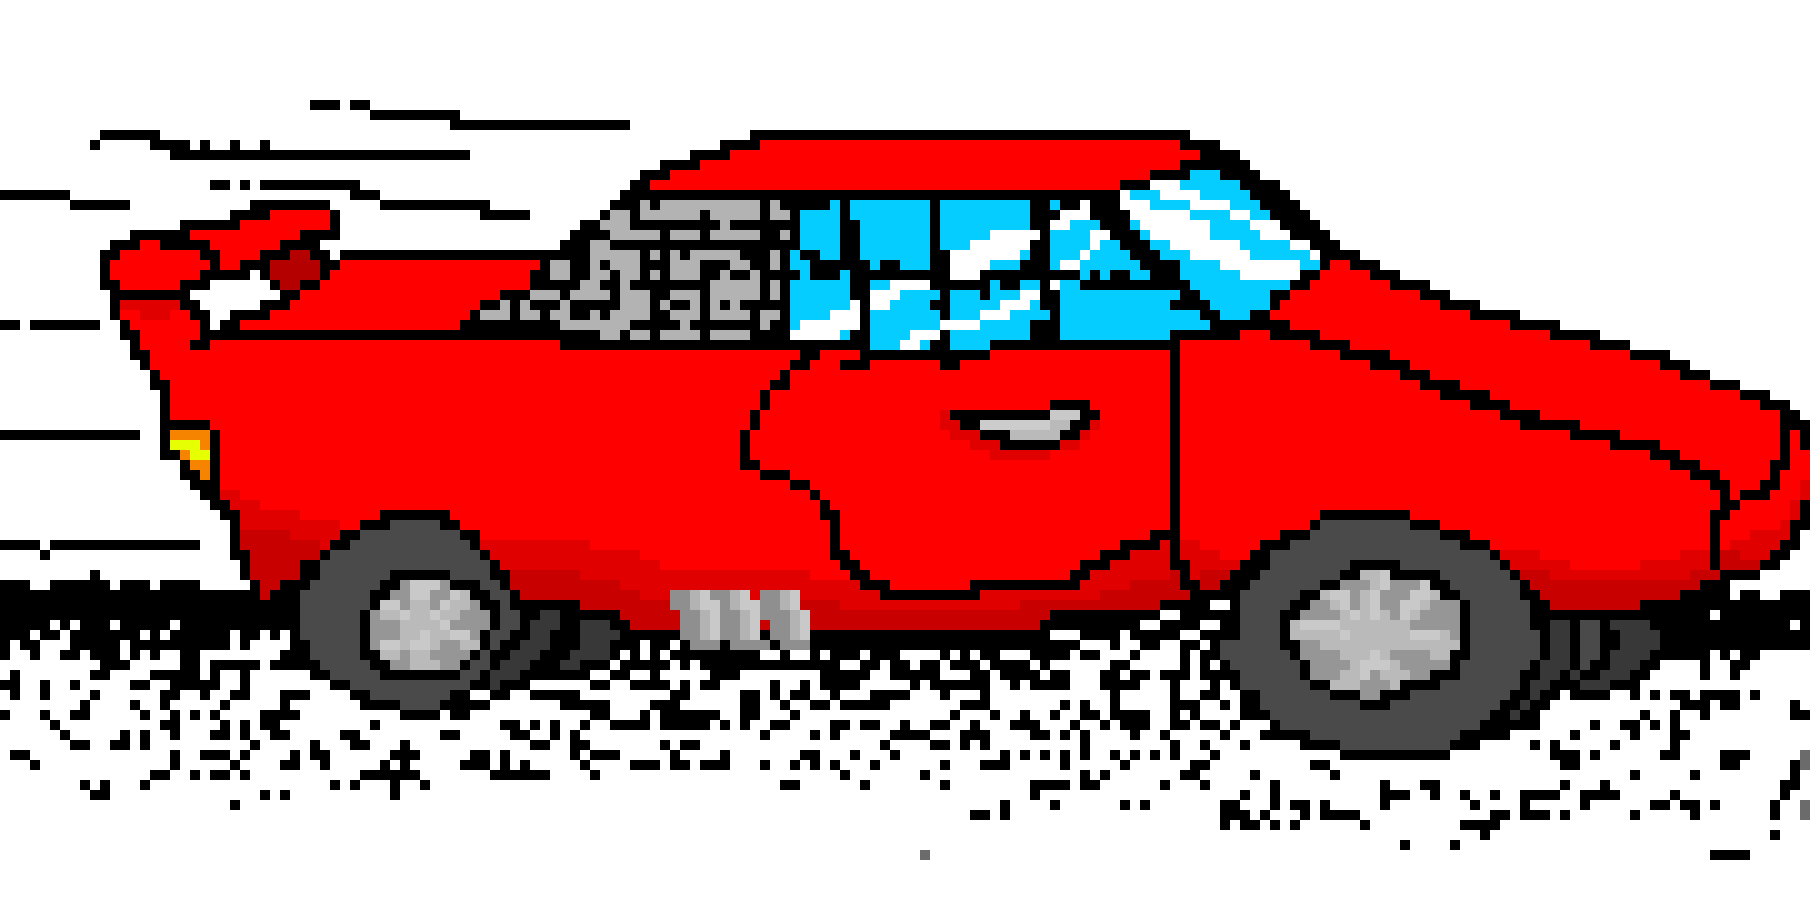 Race Car Pixel Art Maker